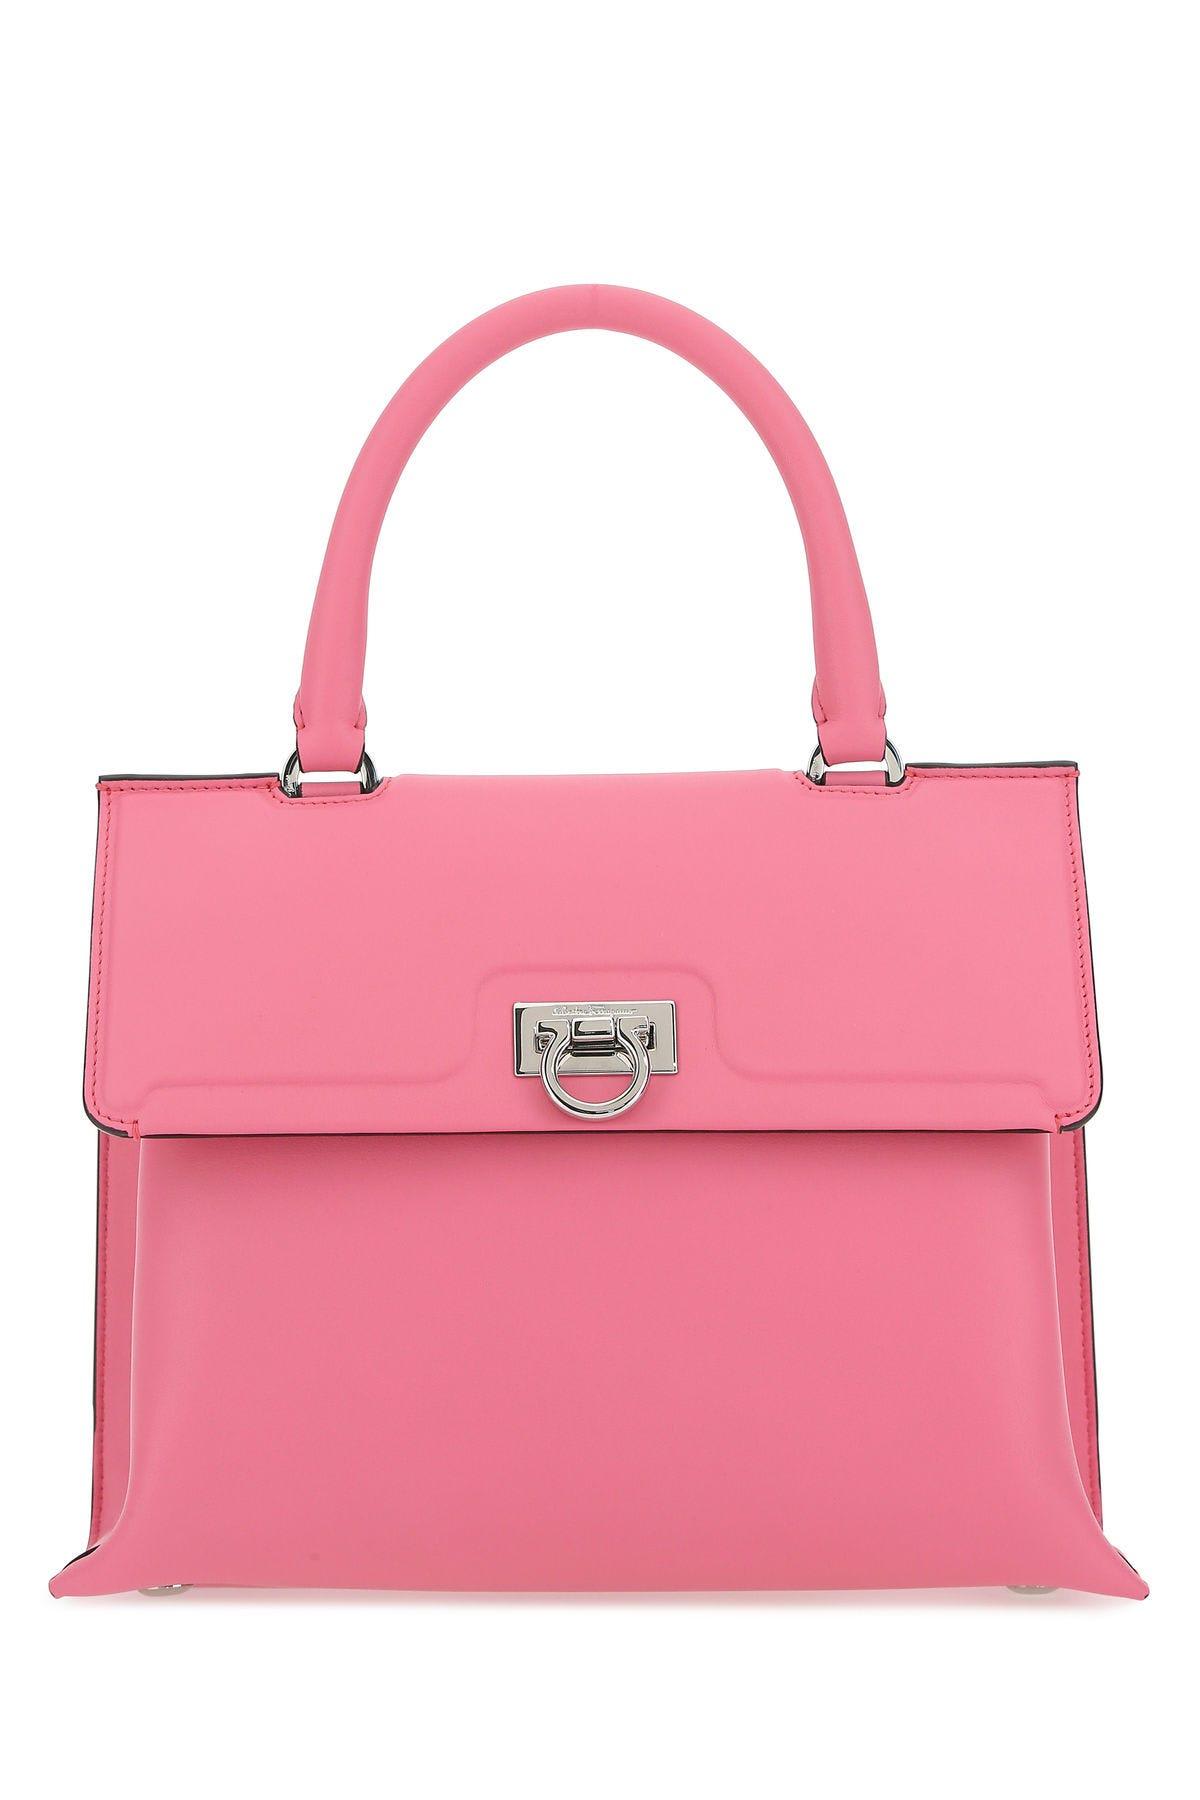 Salvatore Ferragamo Pink Leather Trifolio Handbag